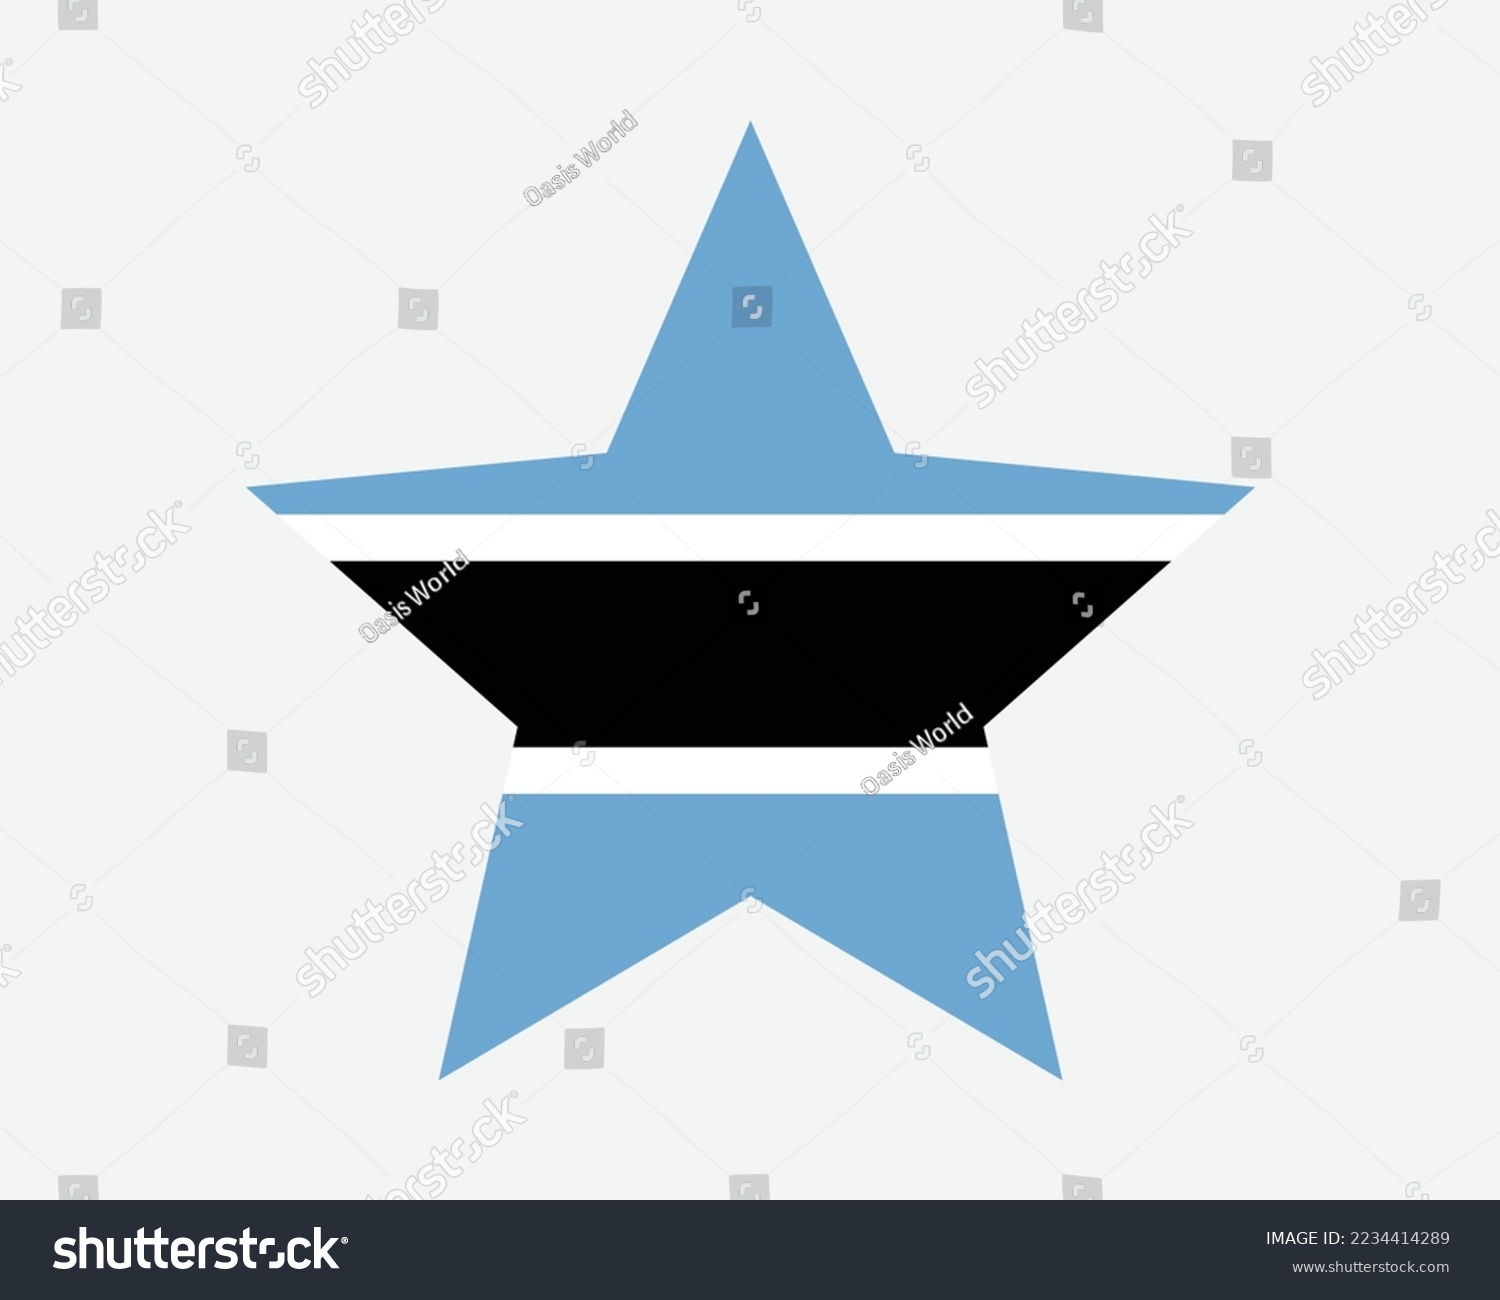 SVG of Botswana Star Flag. Batswana Star Shape Flag. Motswana Country National Banner Icon Symbol Vector 2D Flat Artwork Graphic Illustration svg